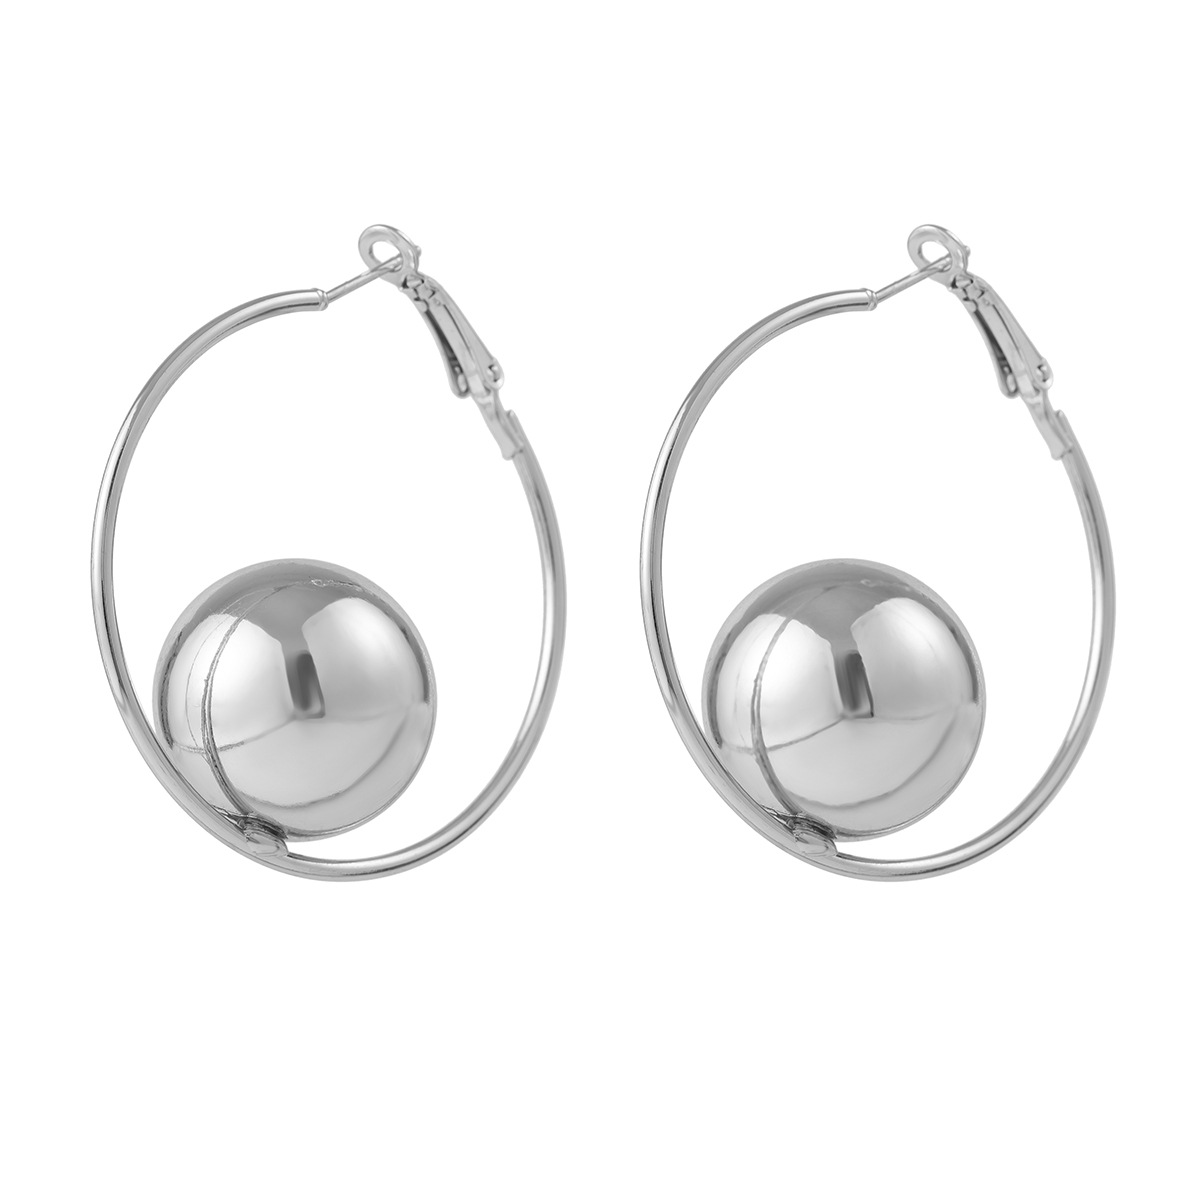 Platinum color earrings